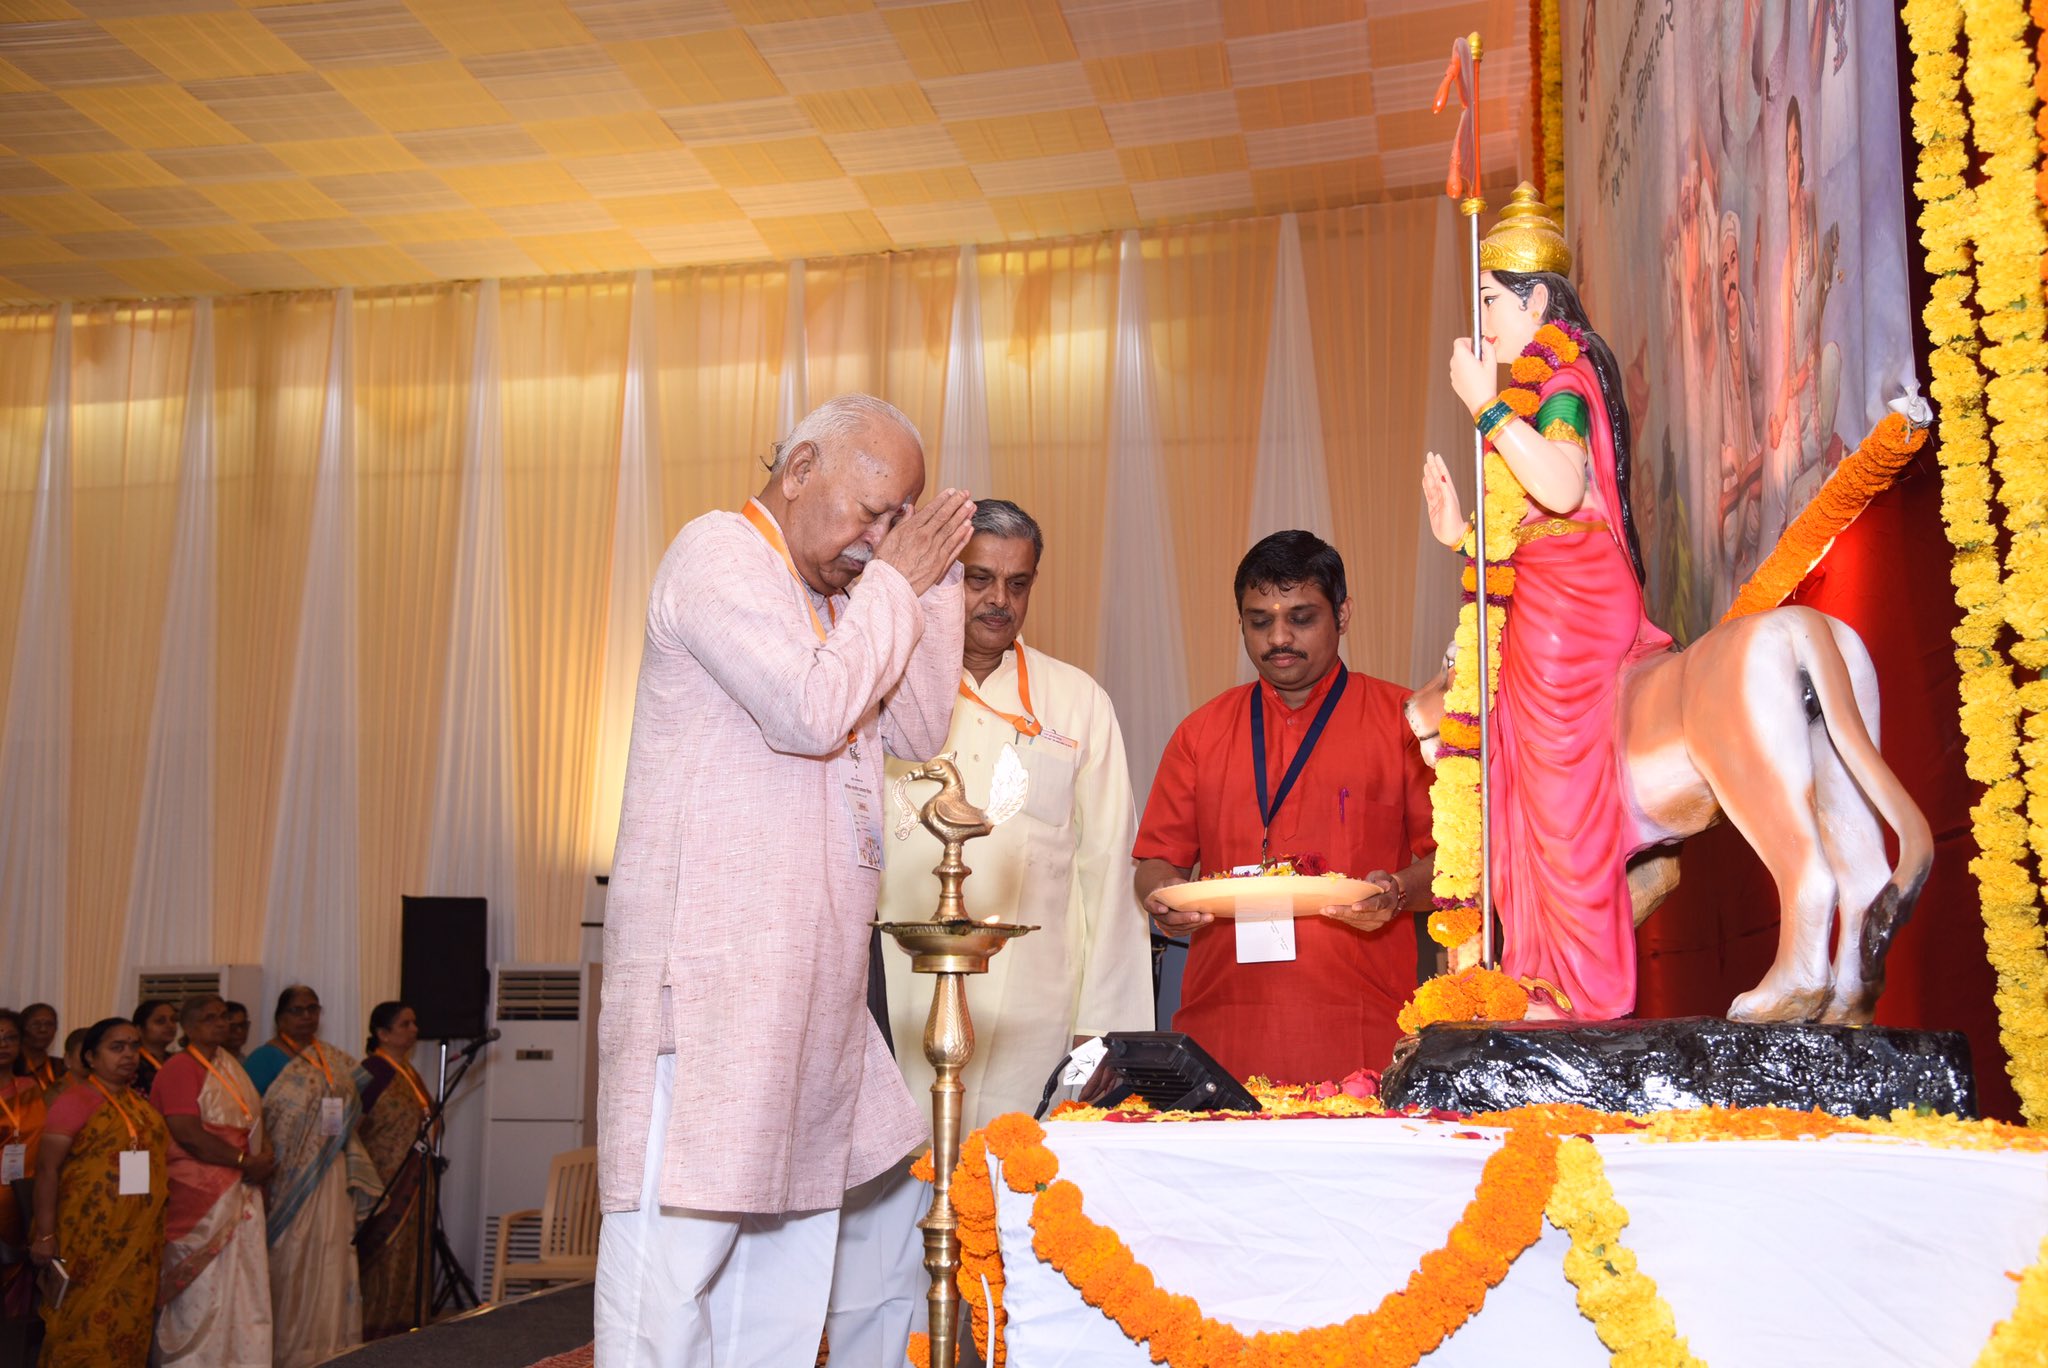 All India Coordination Meeting of Rashtriya Swayamsevak Sangh inaugurated in Pune